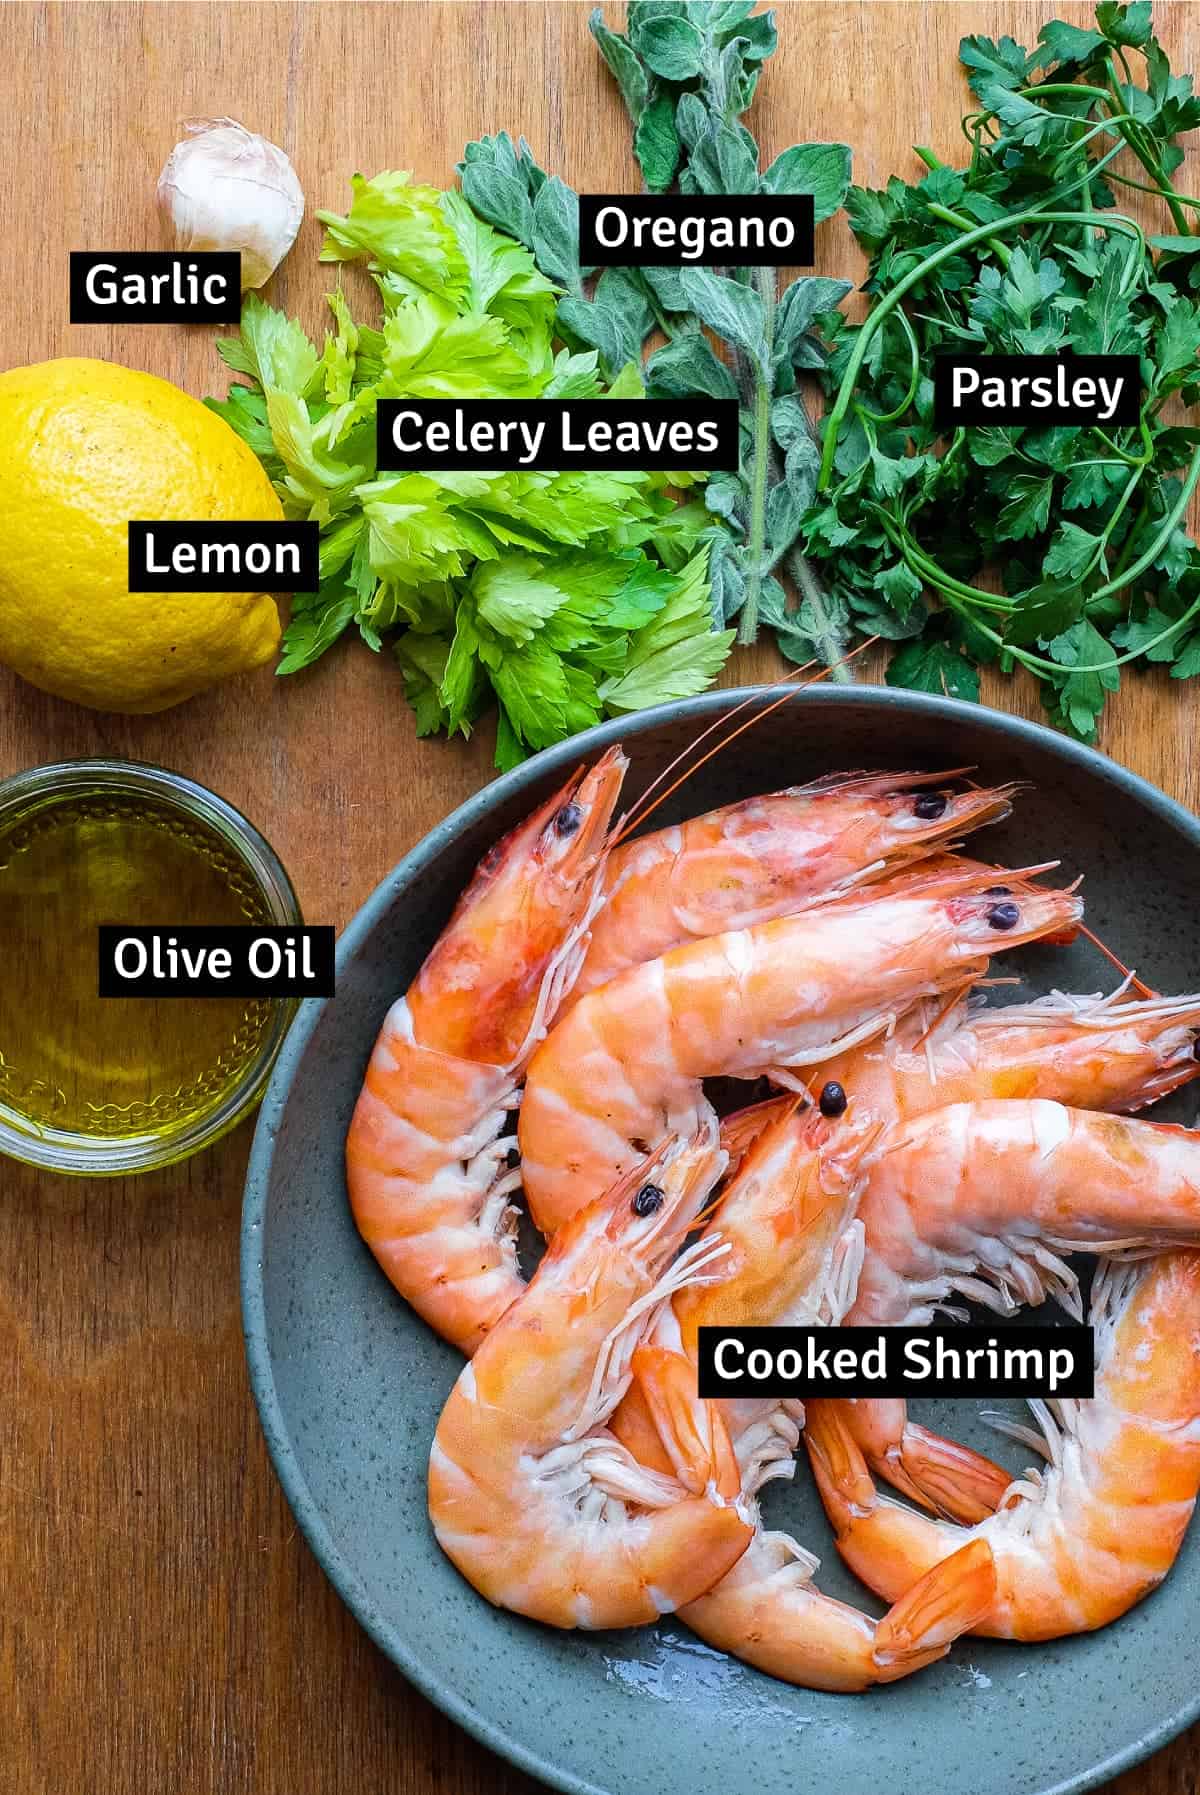 The ingredients for Italian Salmoriglio sauce with shrimp: herbs, lemon, oil, garlic and shrimp.